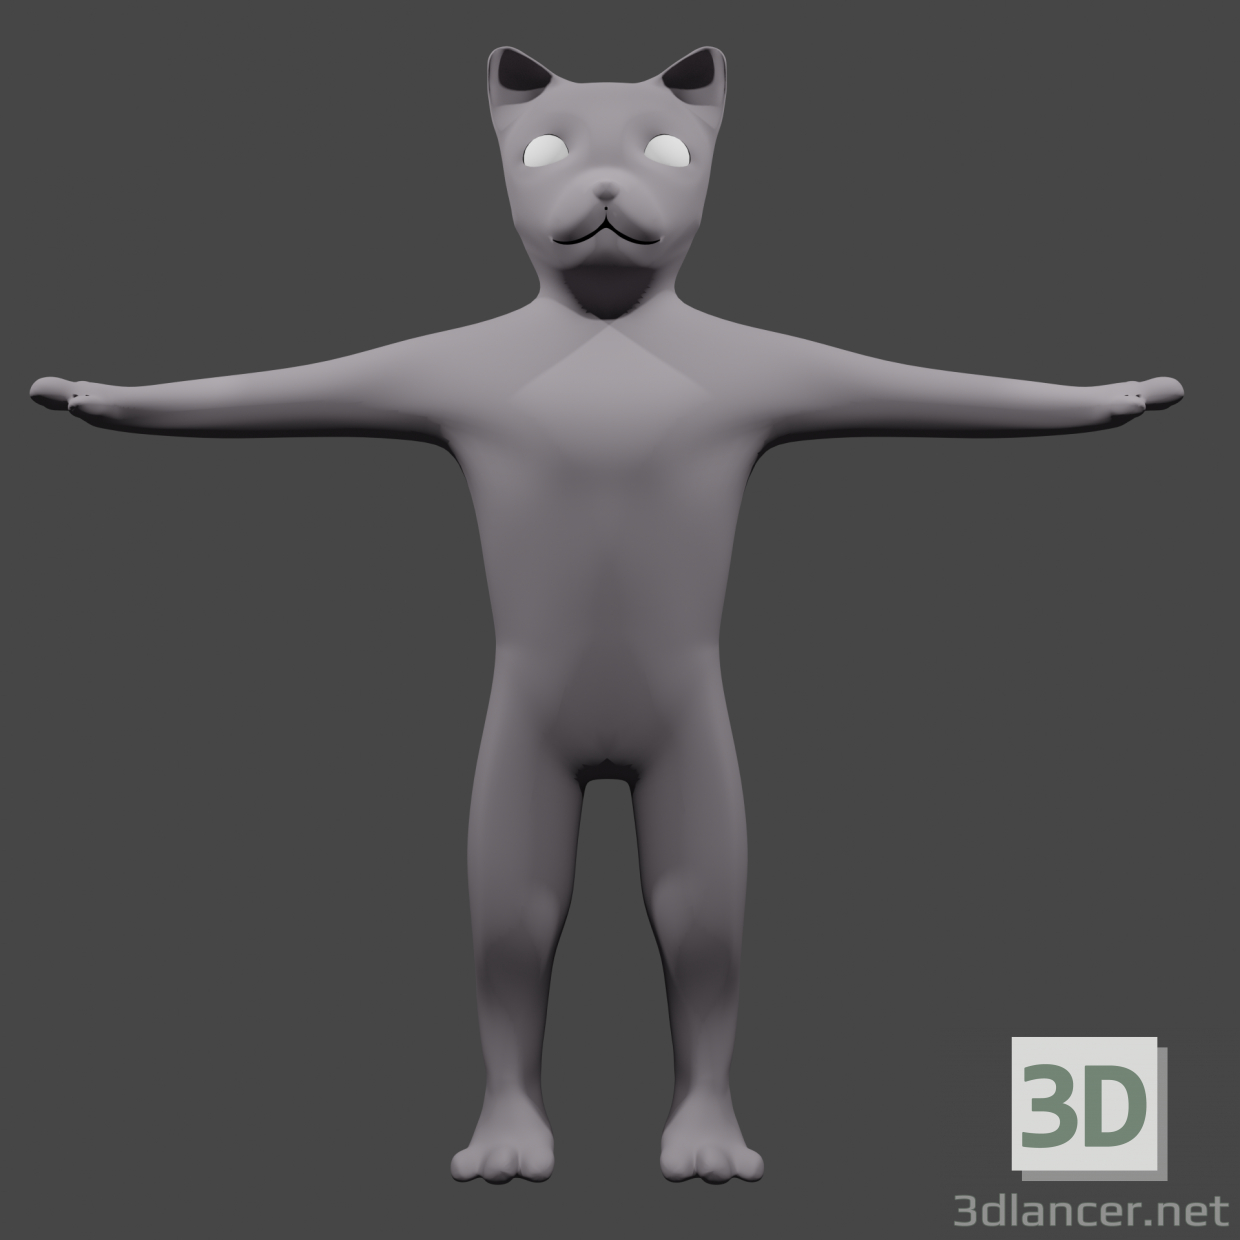 LOW POLY CAT 3D-Modell kaufen - Rendern